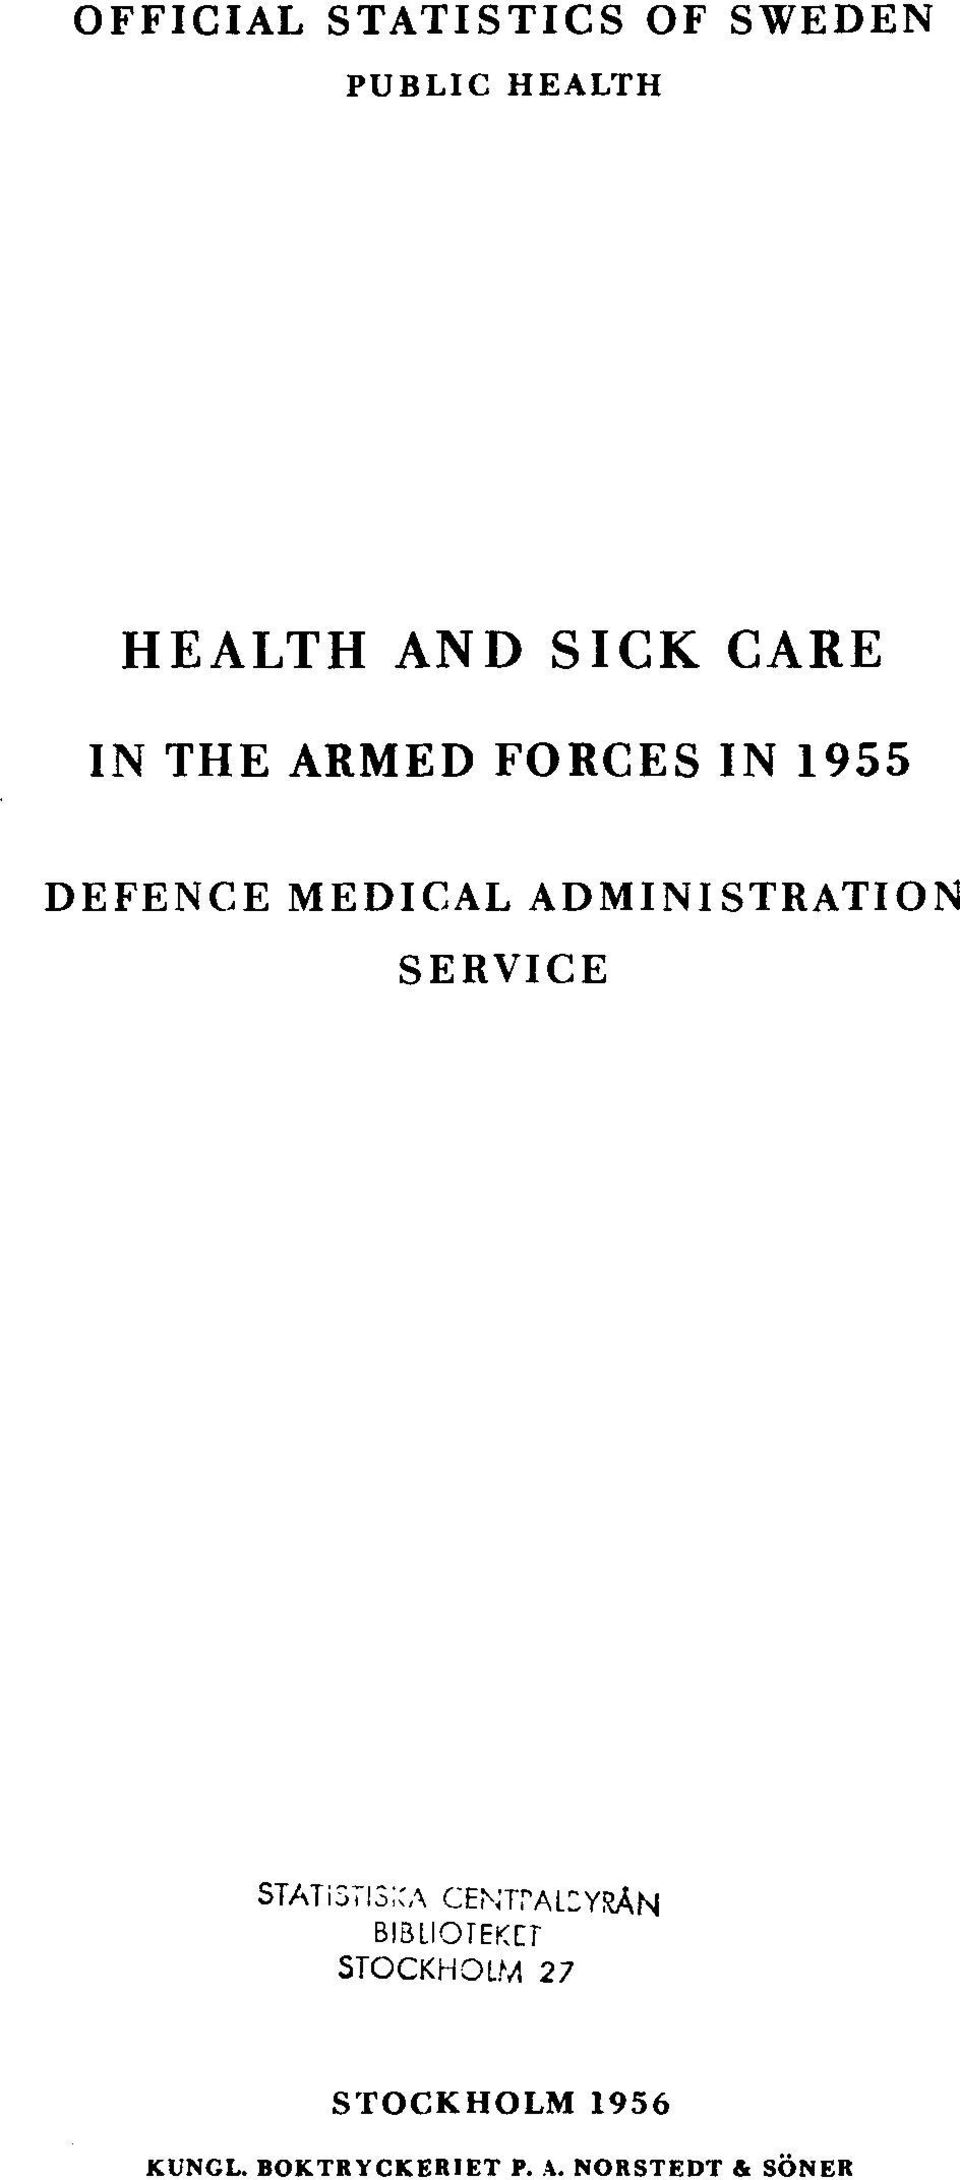 1955 DEFENCE MEDICAL ADMINISTRATION SERVICE